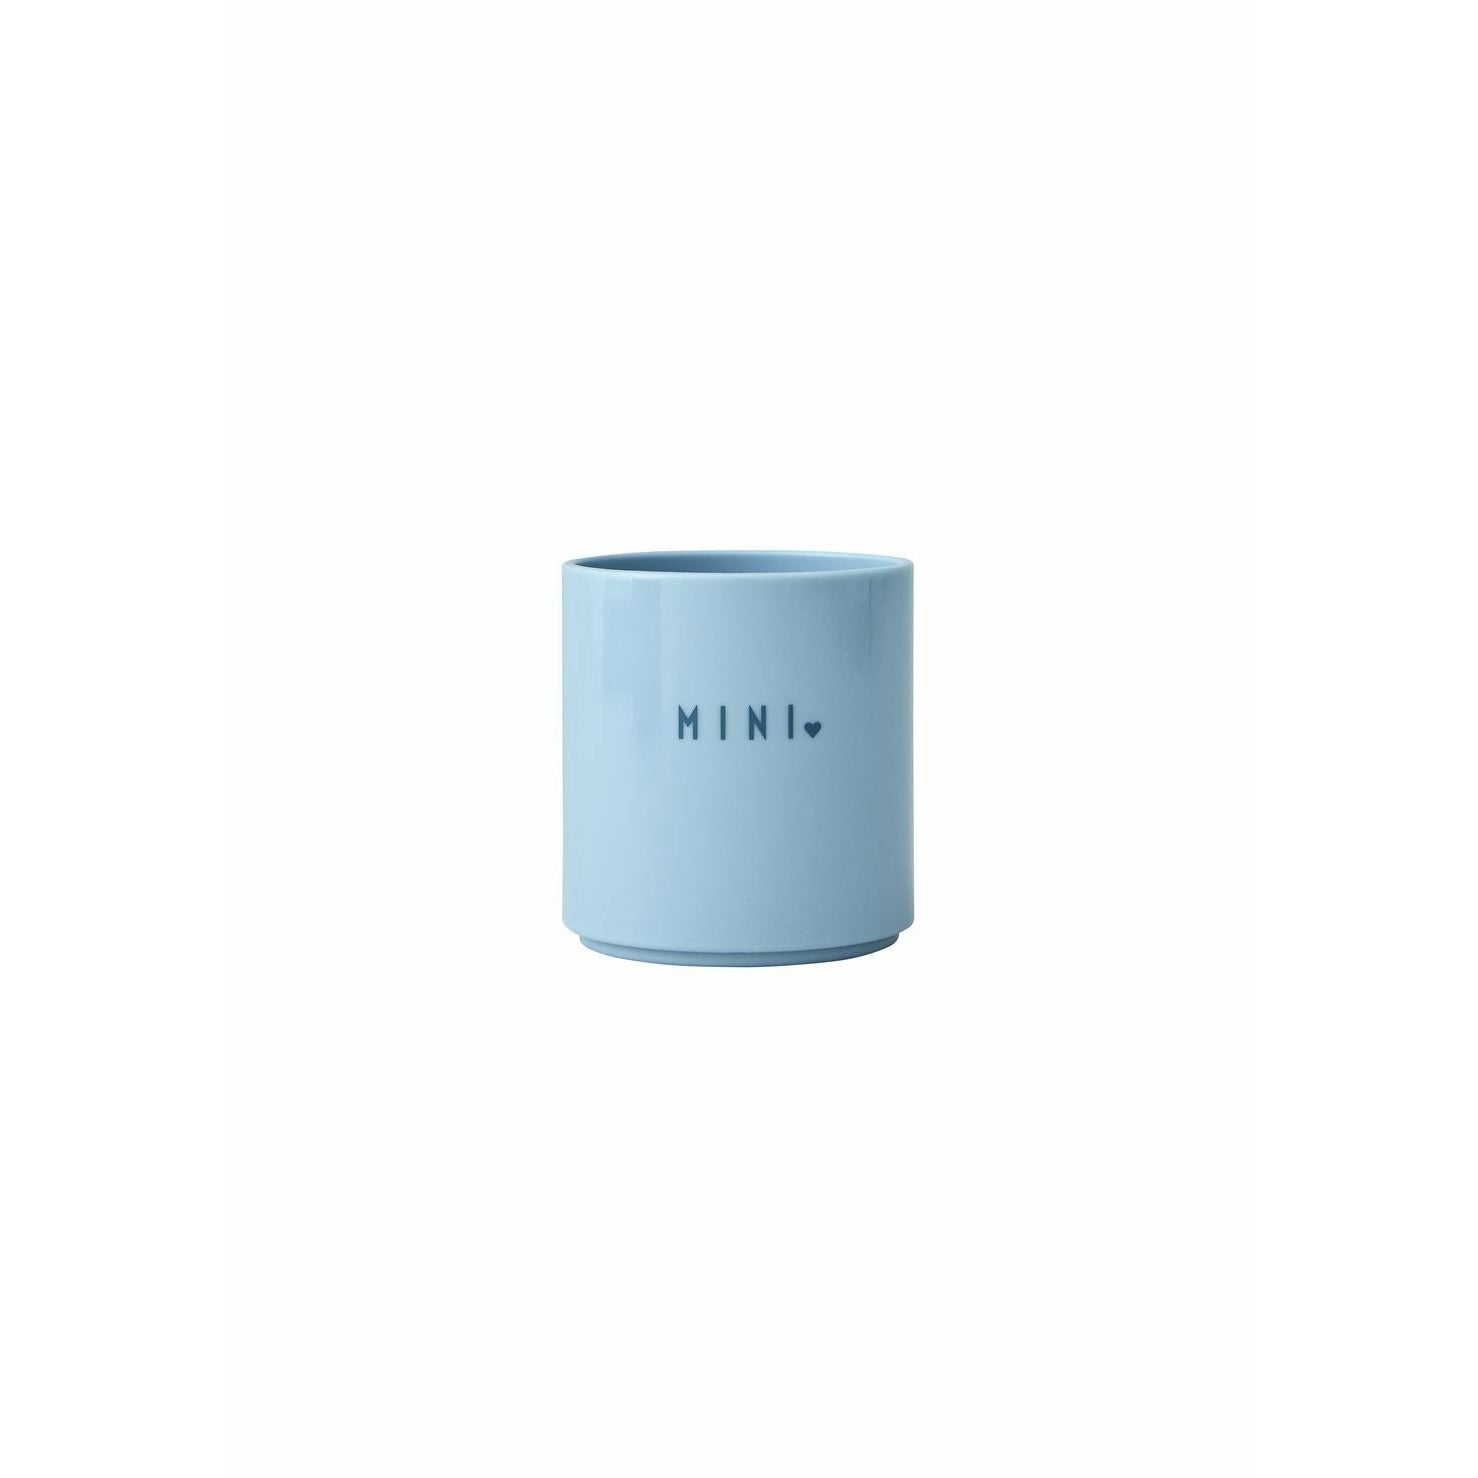 Letras de diseño mini taza favorita azul claro, cariño